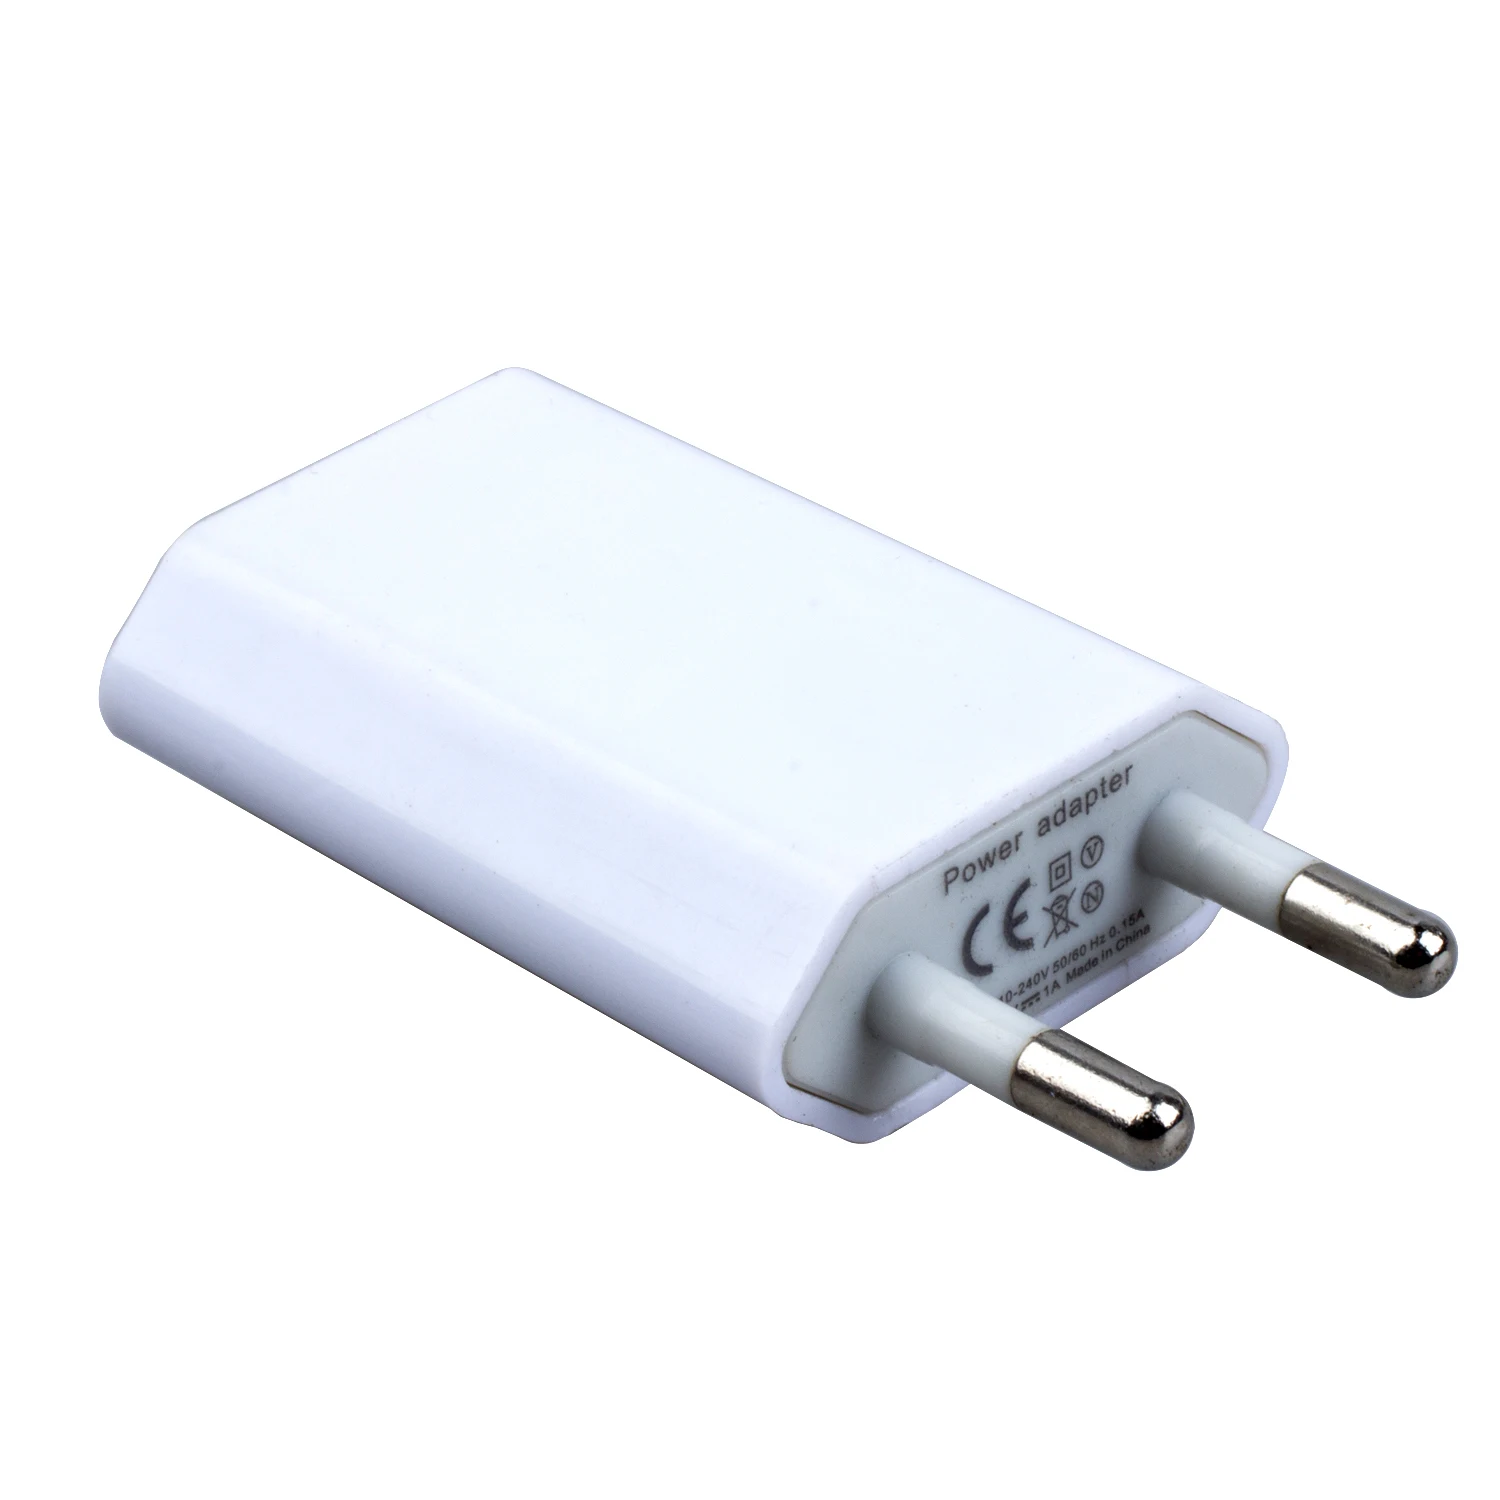 Белый ЕС вилка USB зарядное устройство адаптер переменного тока для iPhone 5 5S 4S 4 3GS iPod Touch Nano